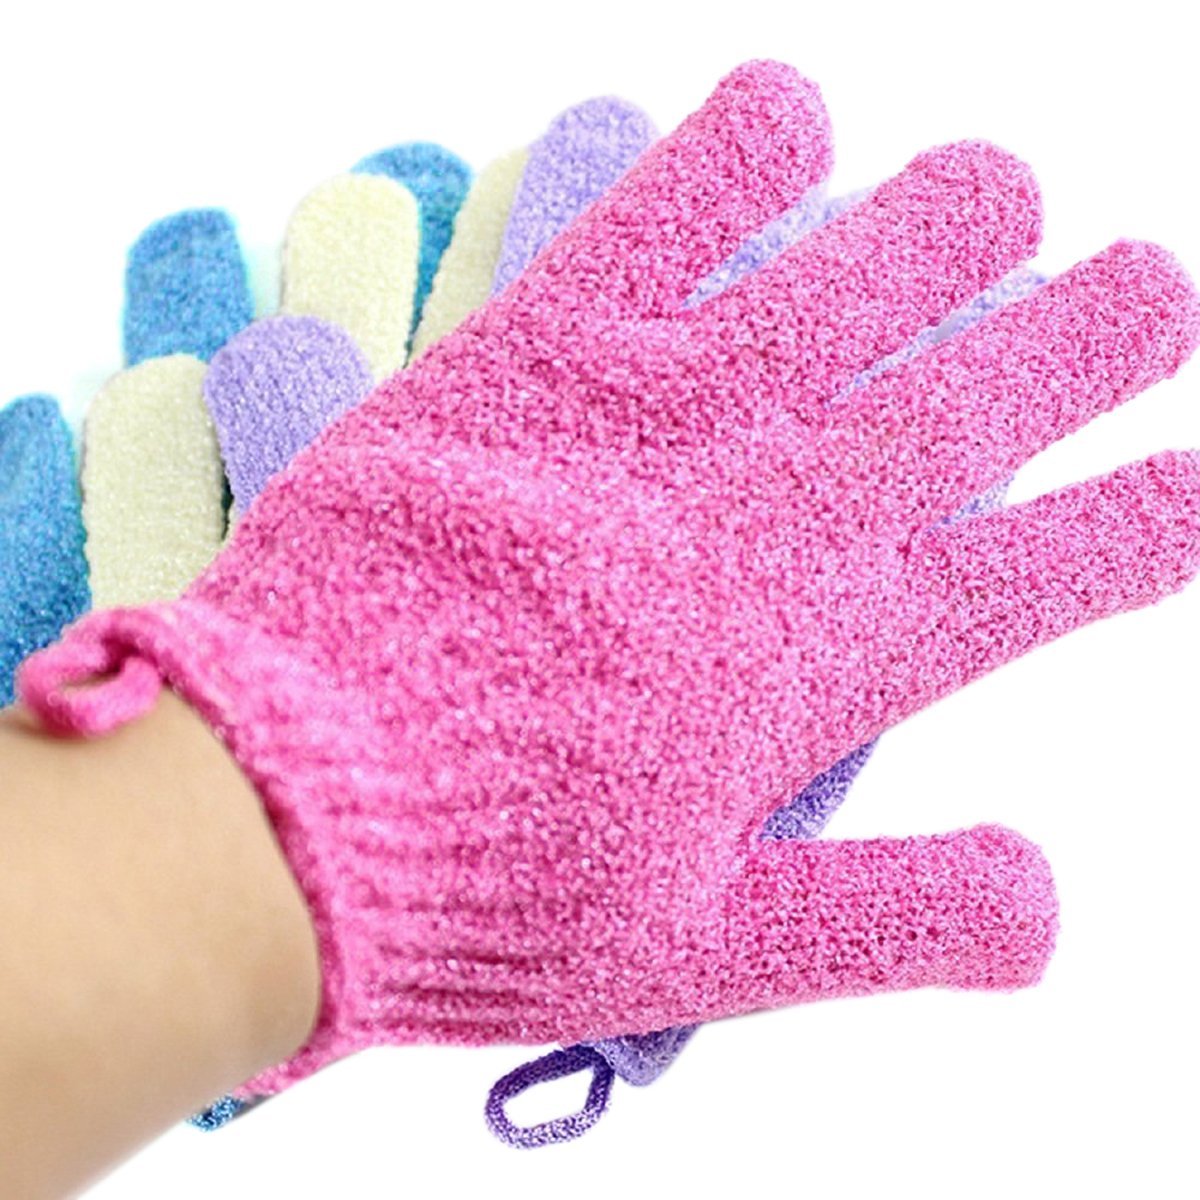 4 Pair Set Scrubbing Exfoliating Gloves, Double Side Durable Nylon Shower Gloves, Body Scrub Exfoliator for Men, Women & Kids, Bath Scrubber for Acne & Dead Cell - image 1 of 6